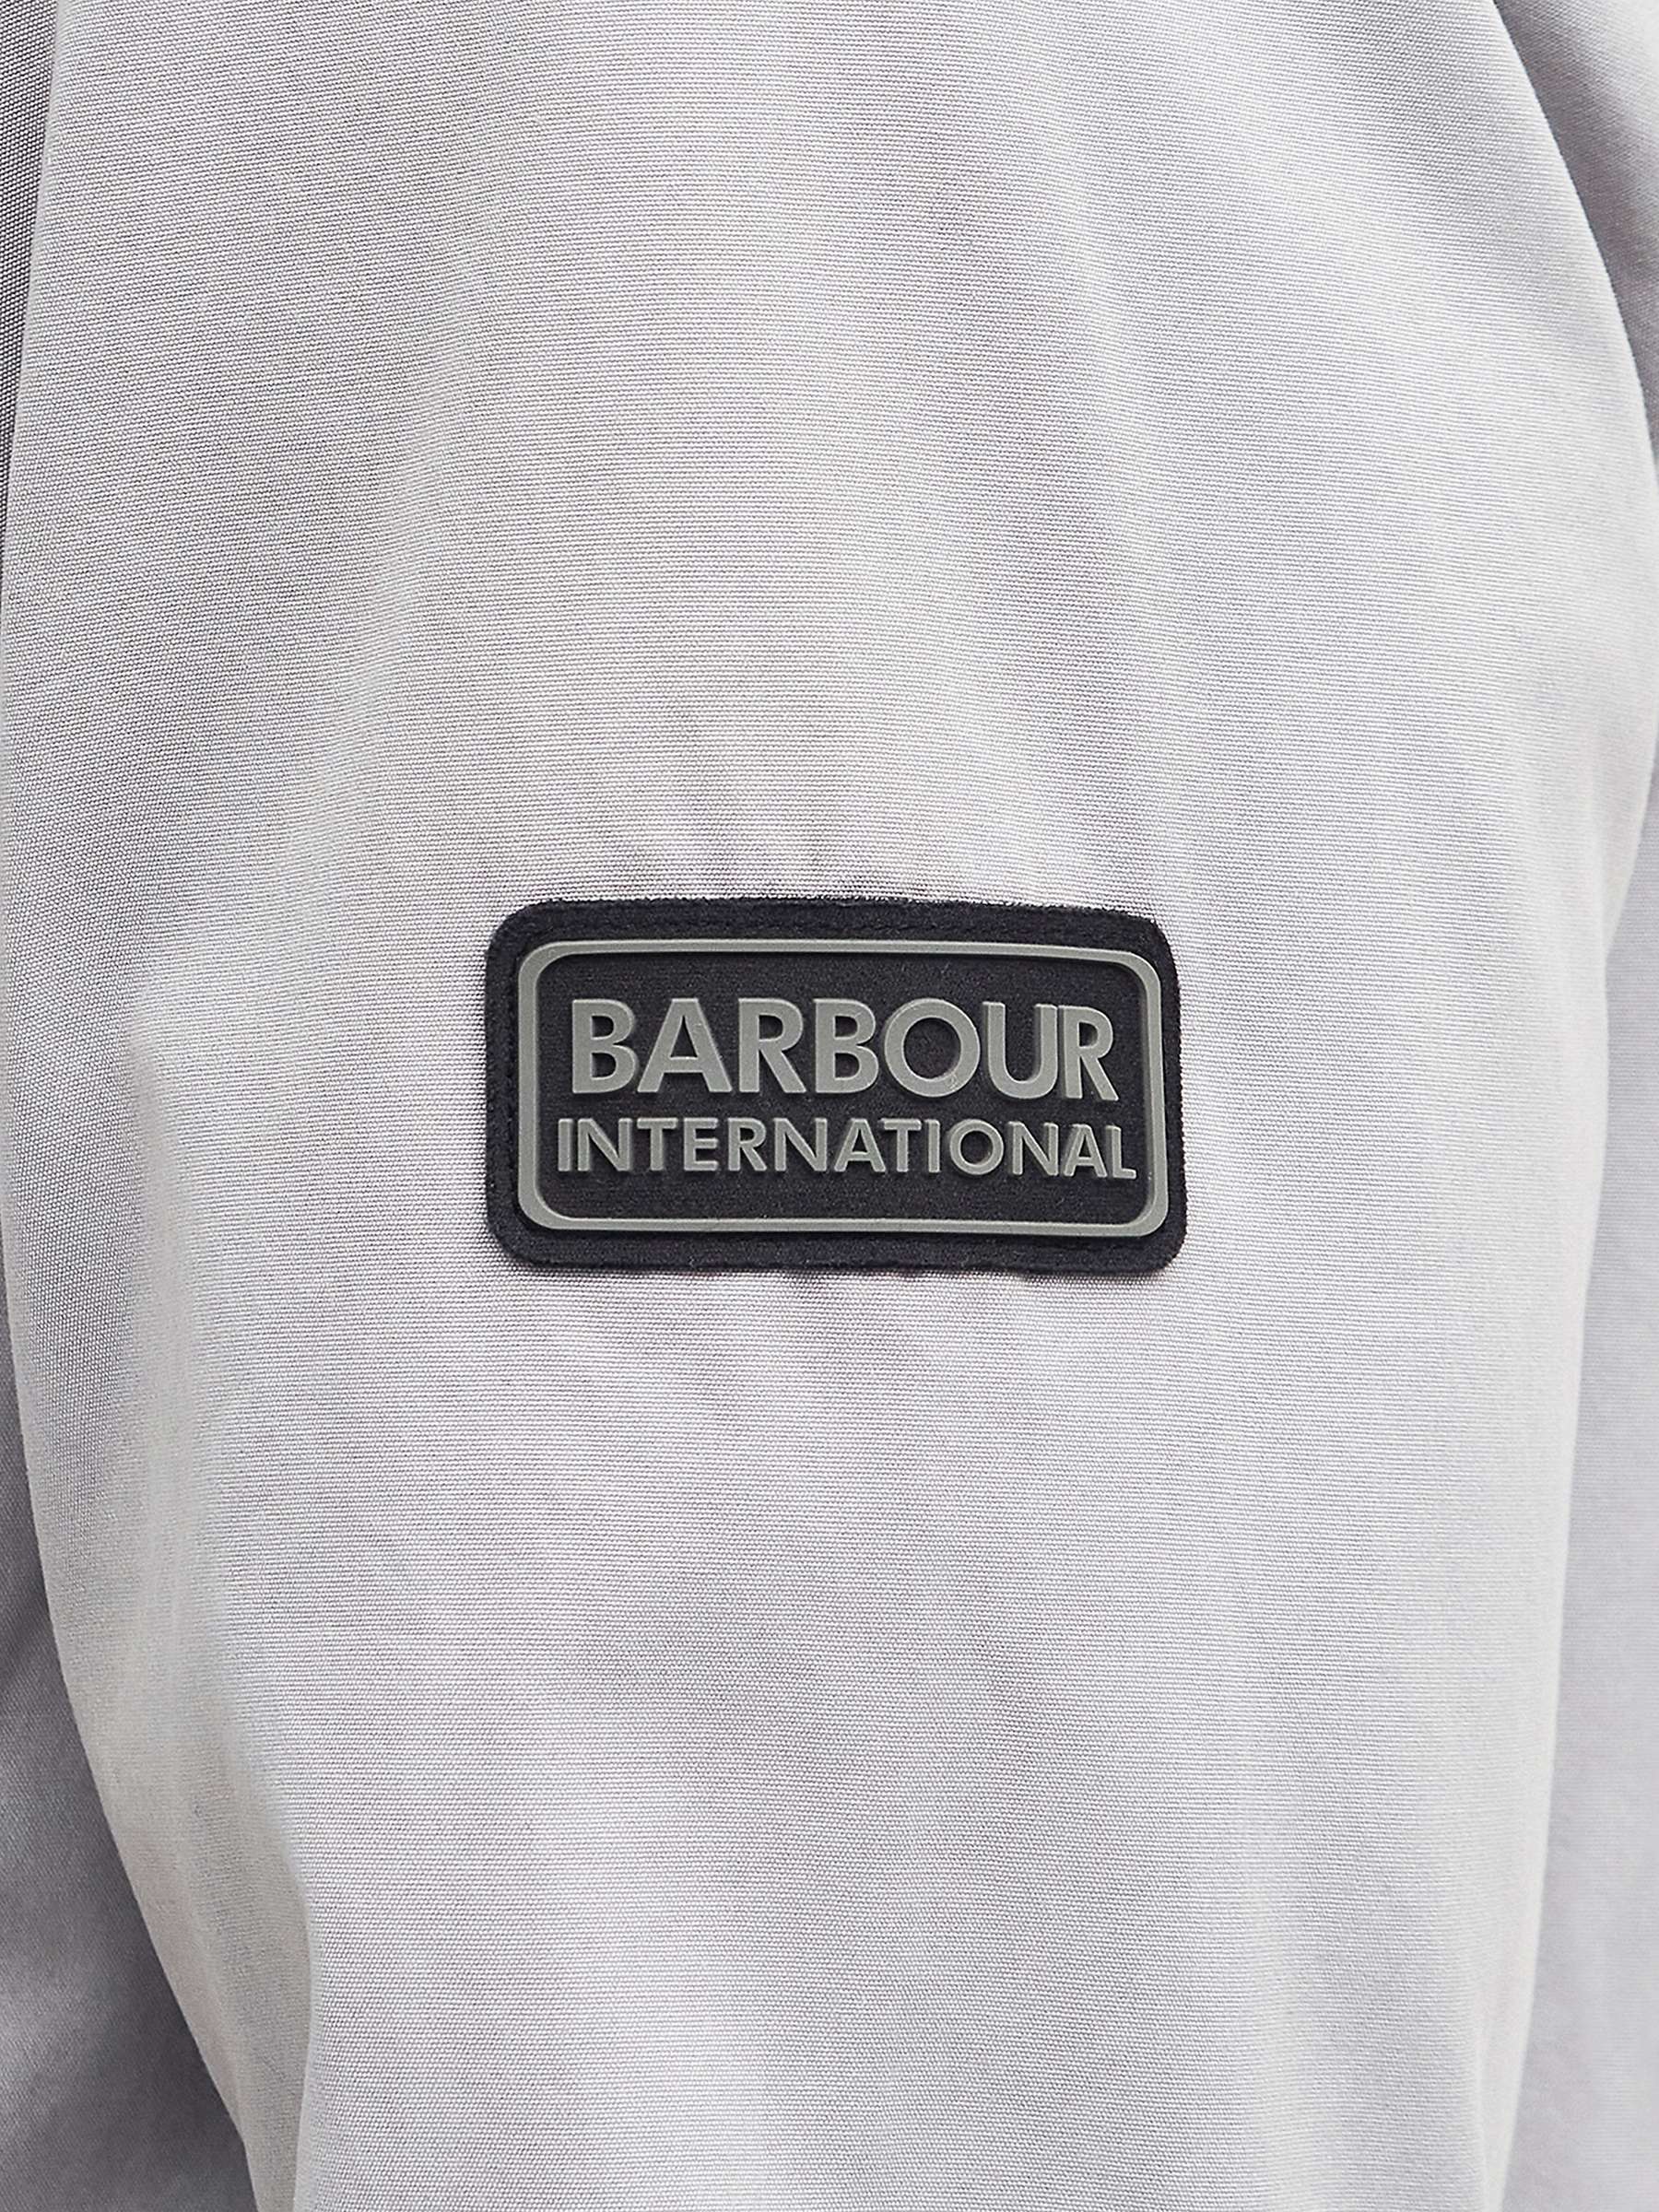 Buy Barbour International Gear Overshirt, Grey Online at johnlewis.com